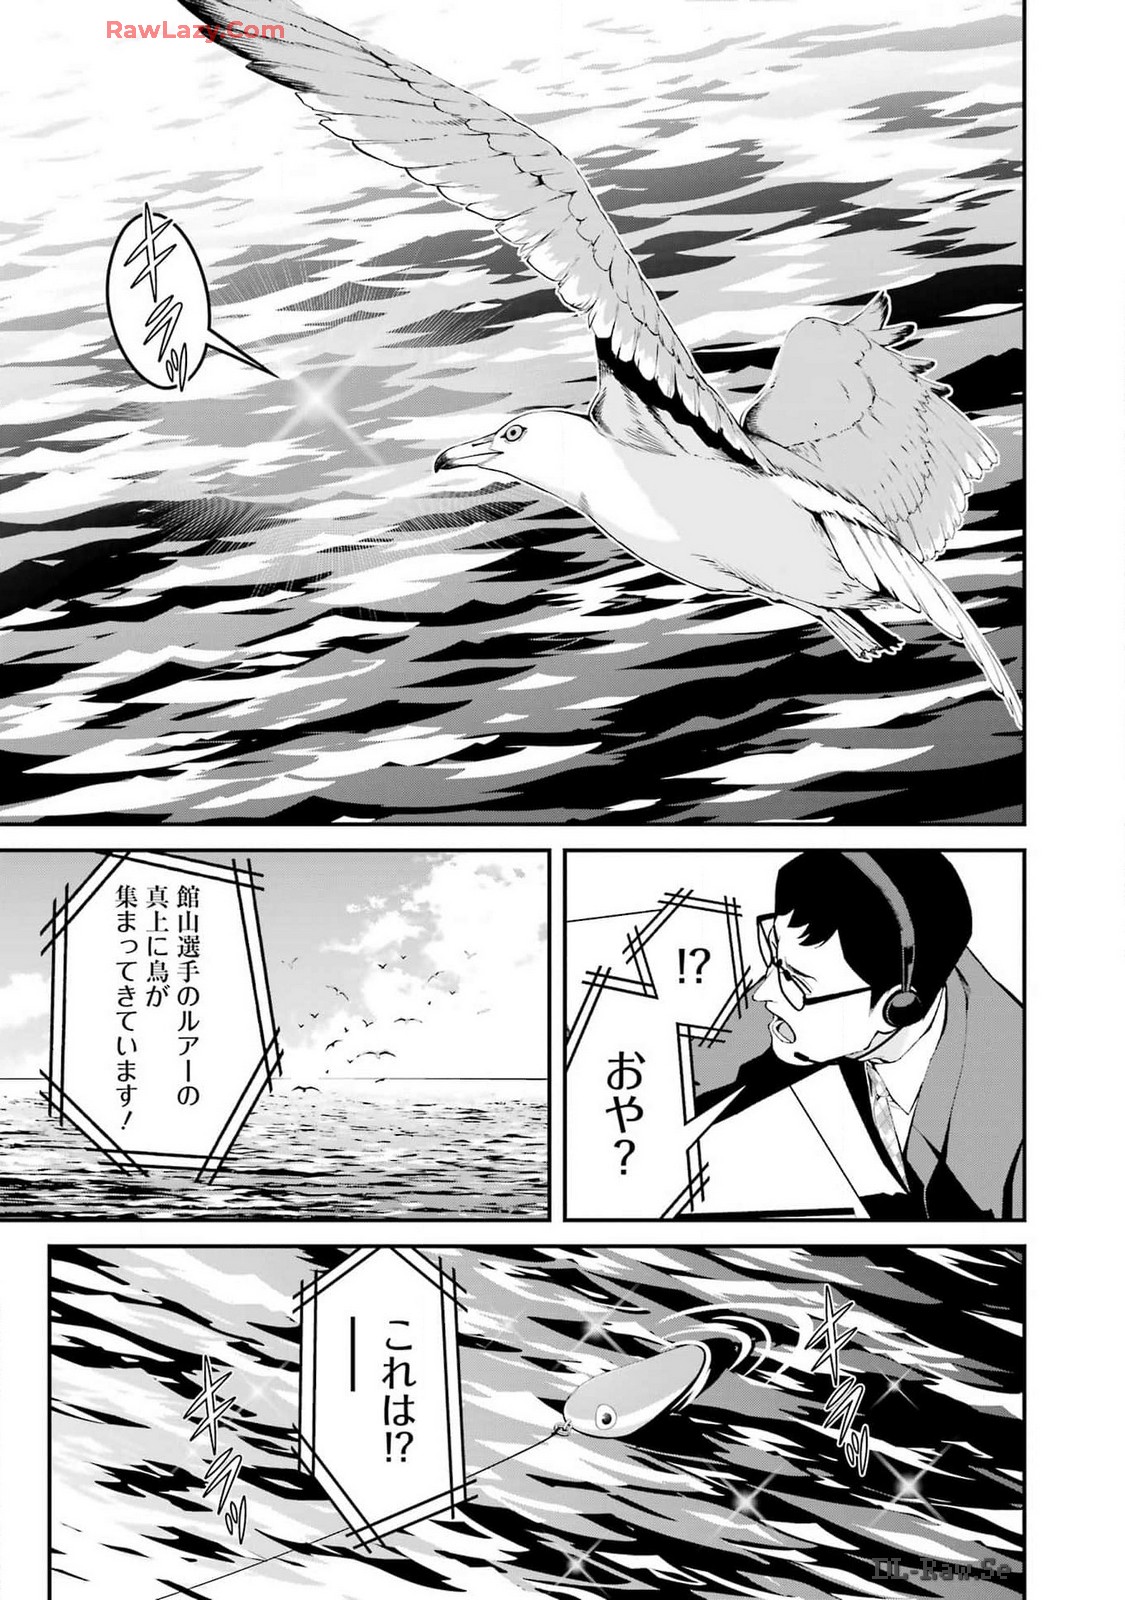 Tsuri Komachi - Chapter 60 - Page 5